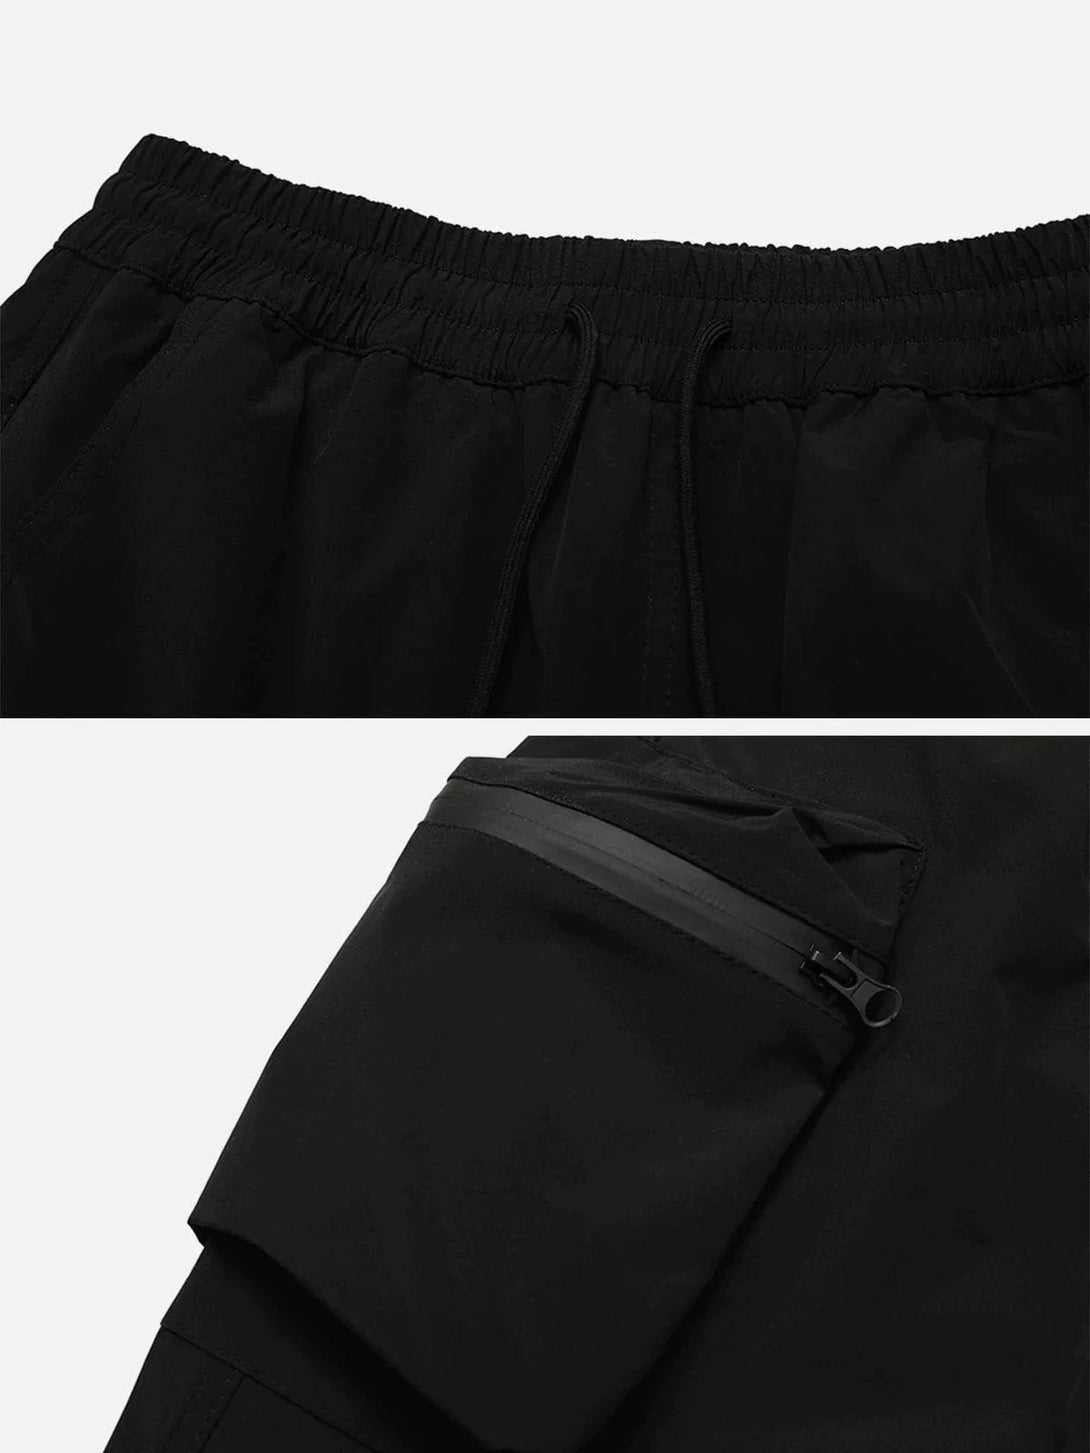 Majesda® - Pockets With Flap Pants outfit ideas streetwear fashion